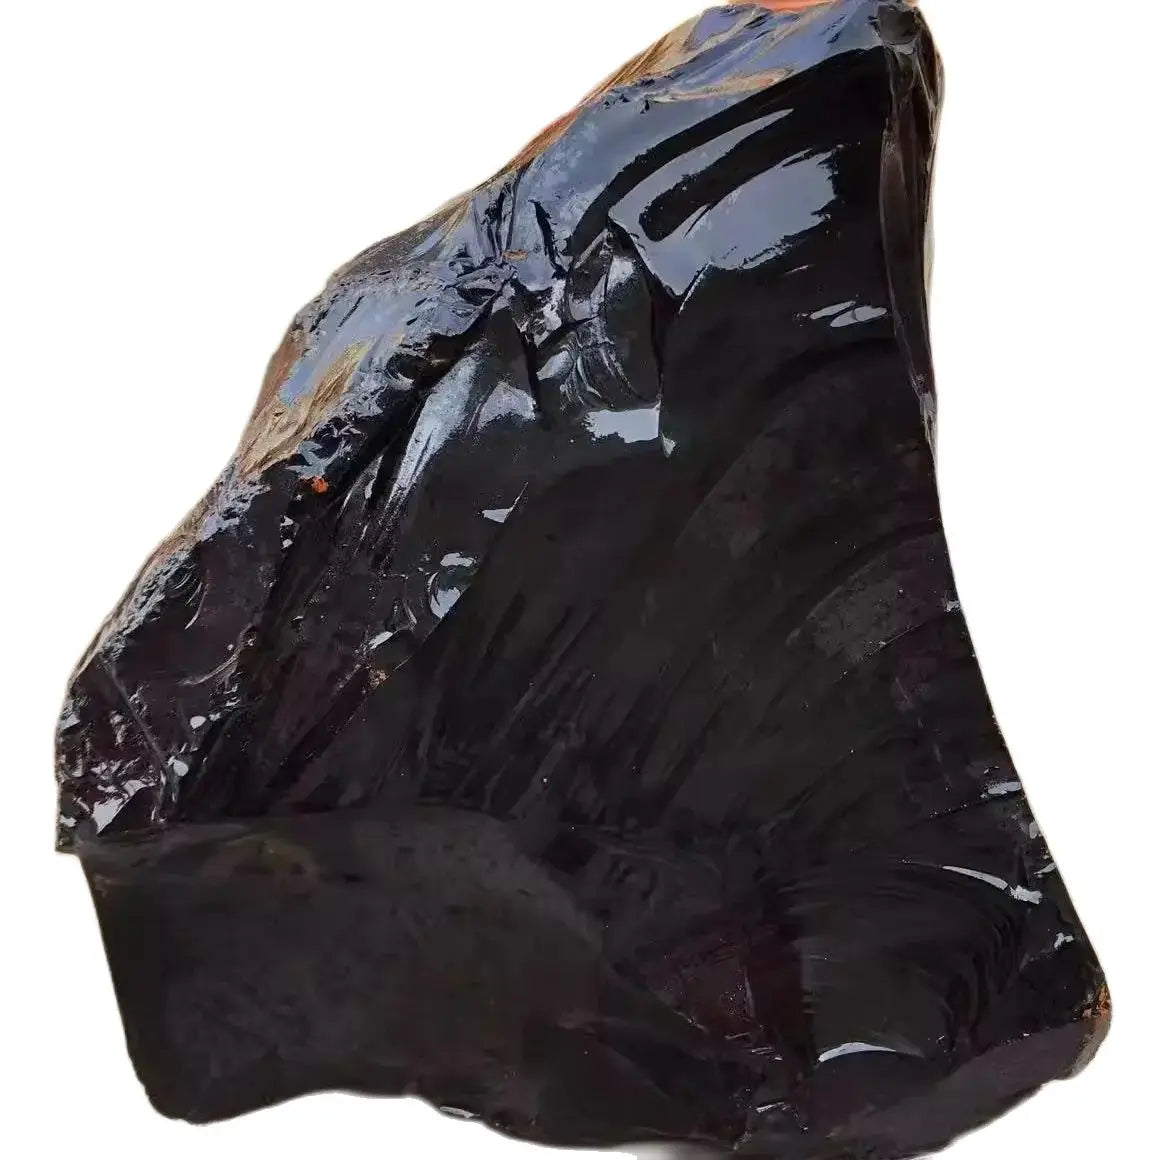 Raw Black Obsidian Healing Crystals - Feng Shui Decor